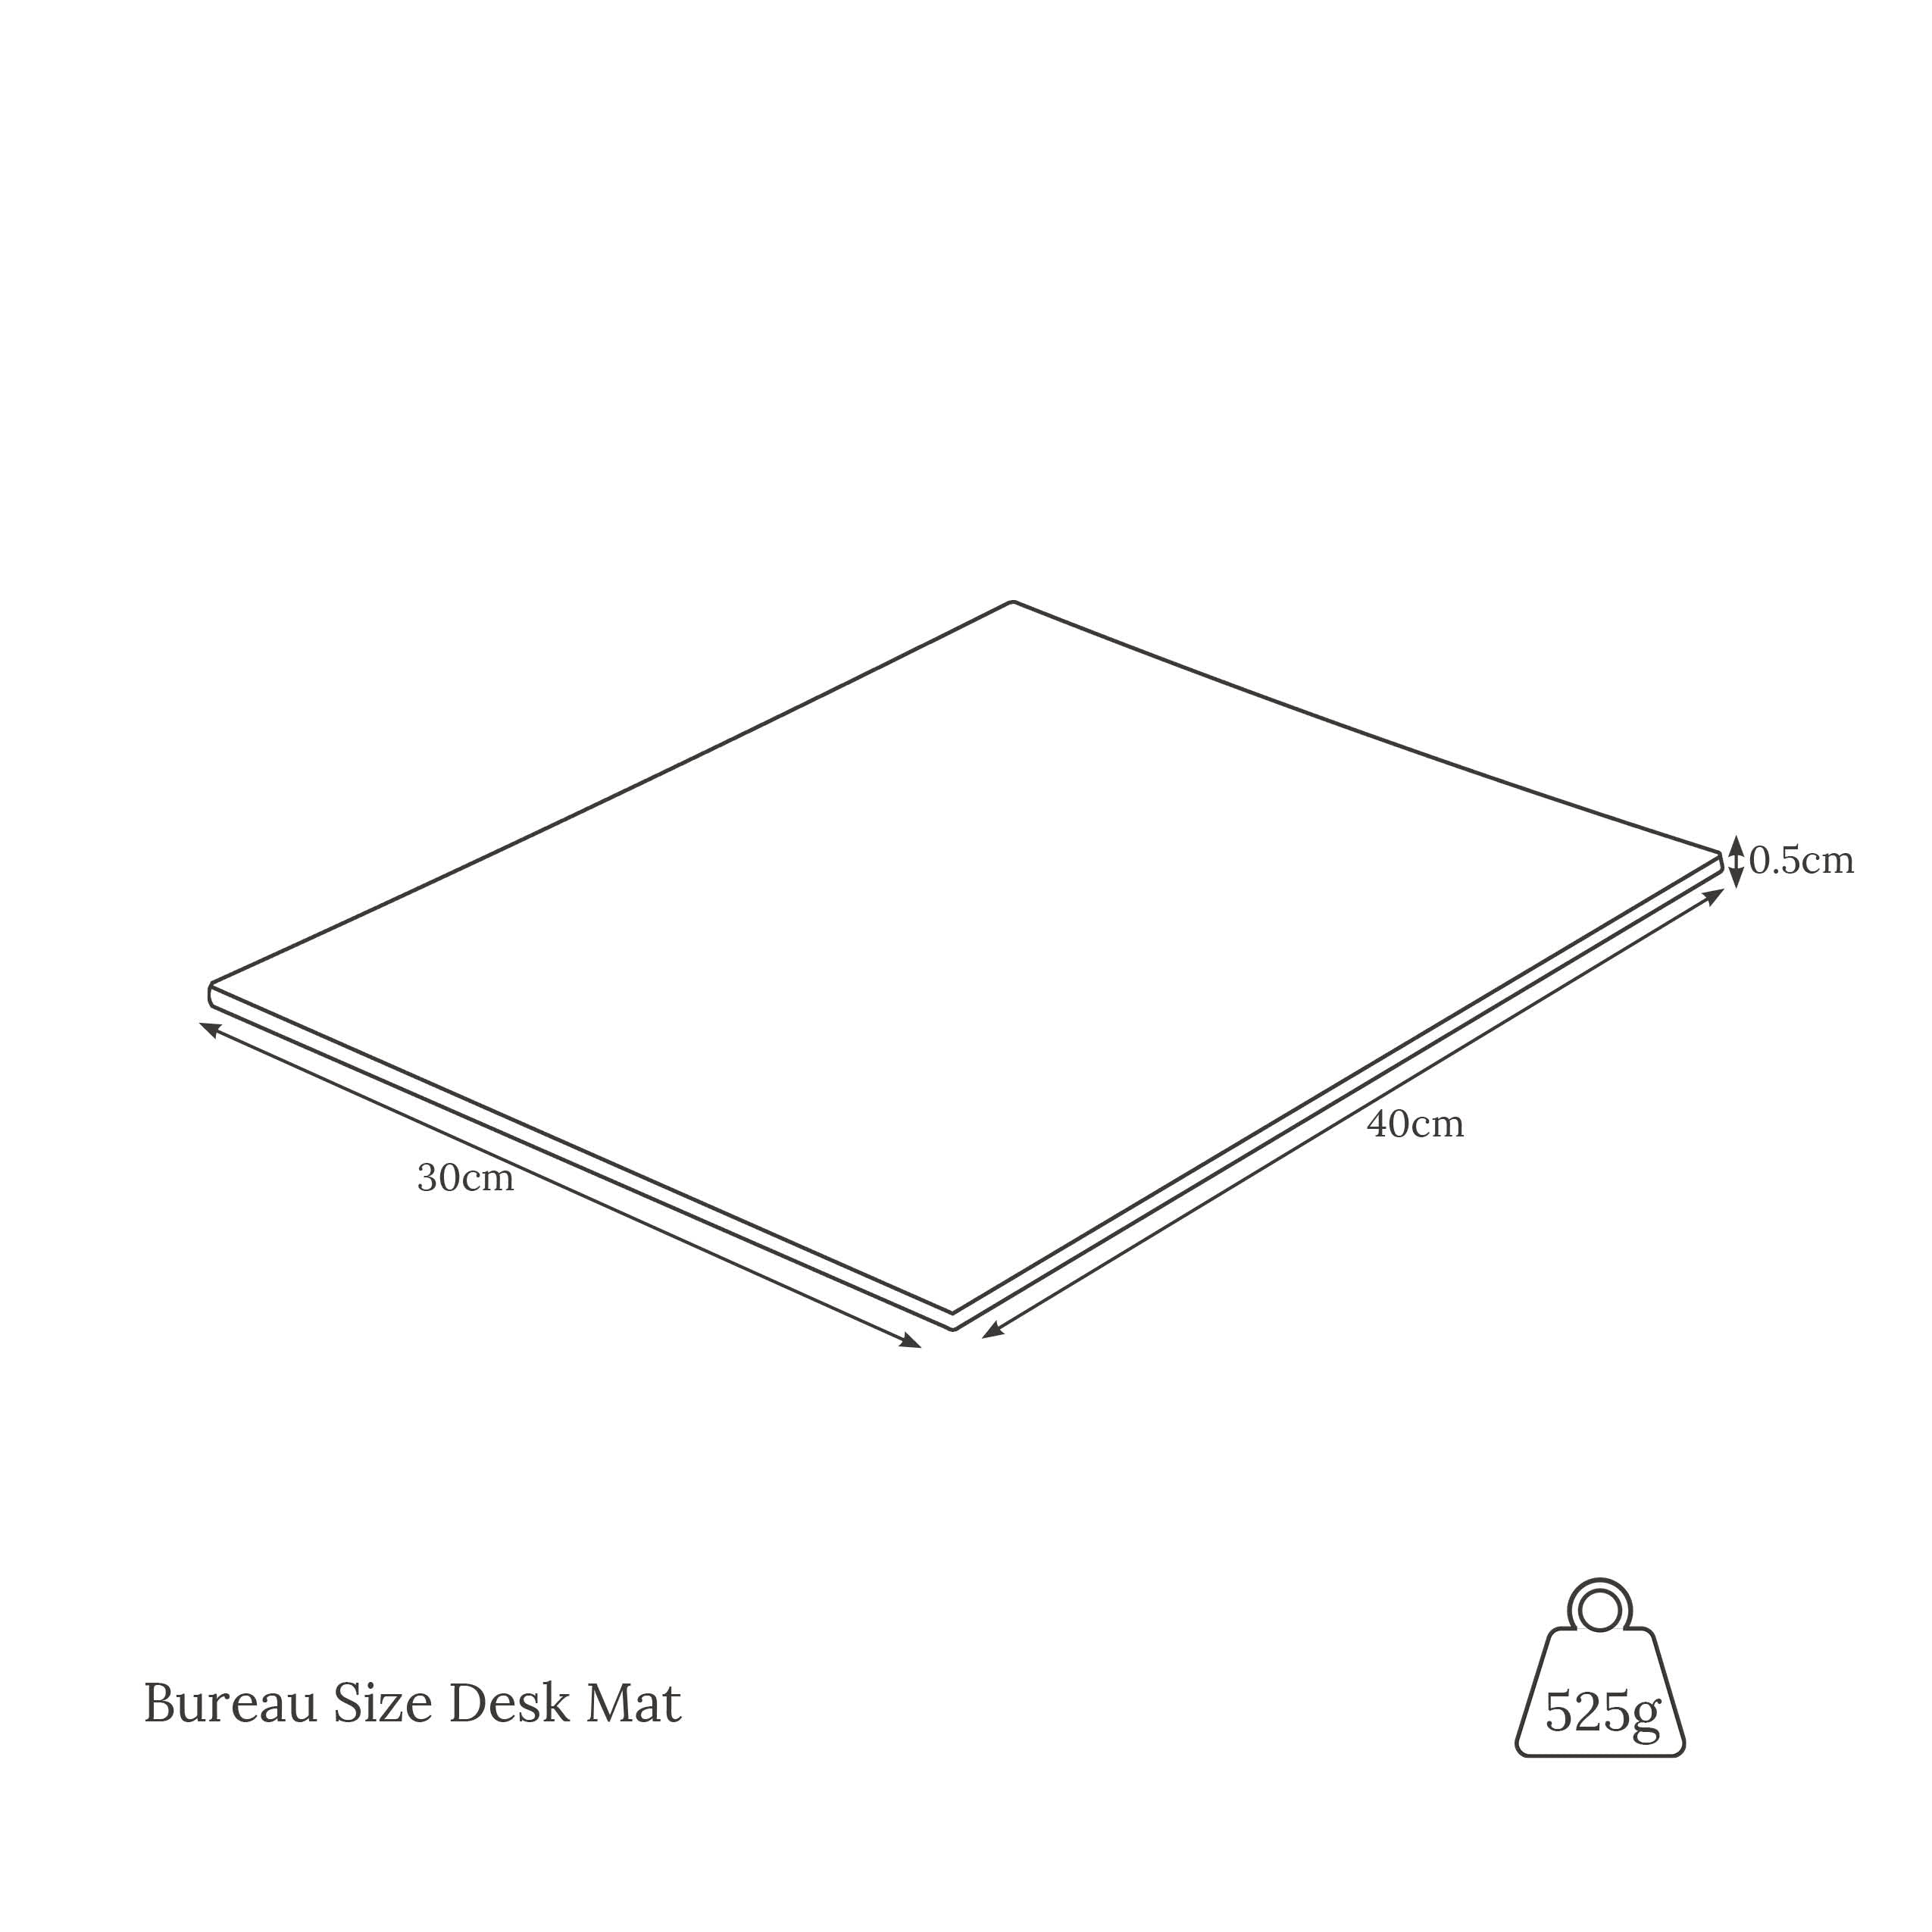 dimensions of leather bureau desk mat